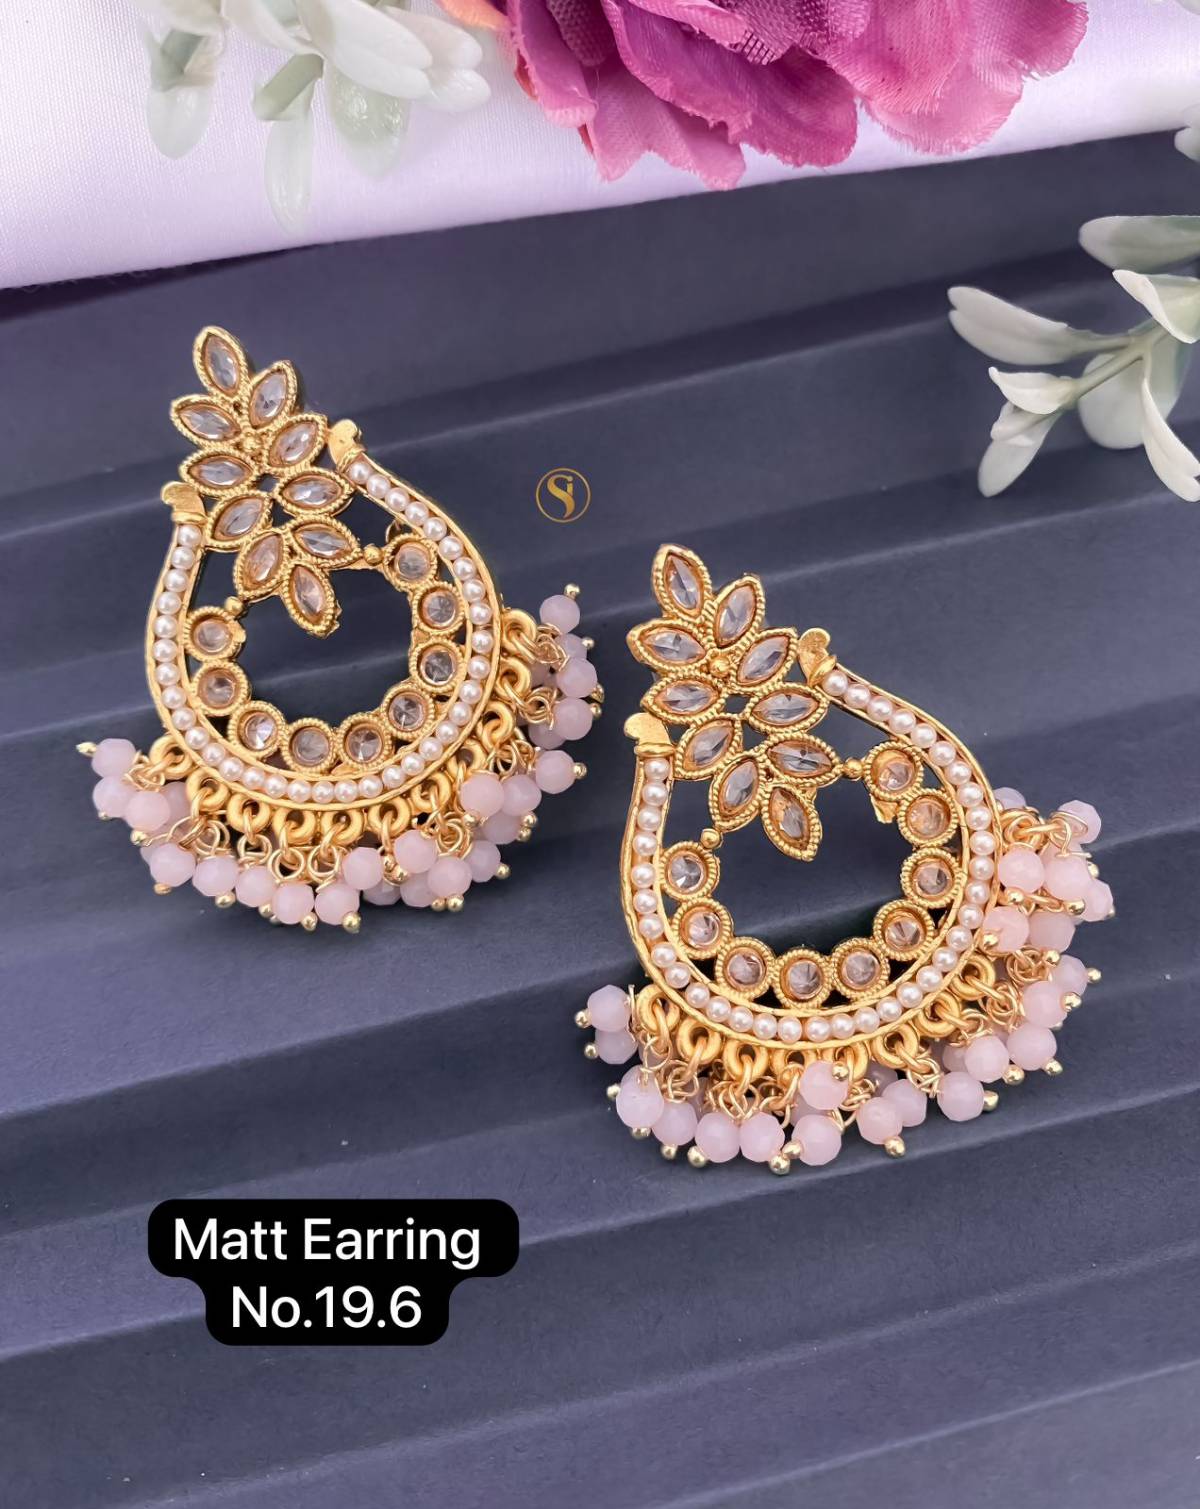 85% OFF on YouBella Jewellery Gold Plated Pearl Fancy Party Wear  Jhumka/Jhumki Earrings for Women Traditional Earrings for Girls on Amazon |  PaisaWapas.com